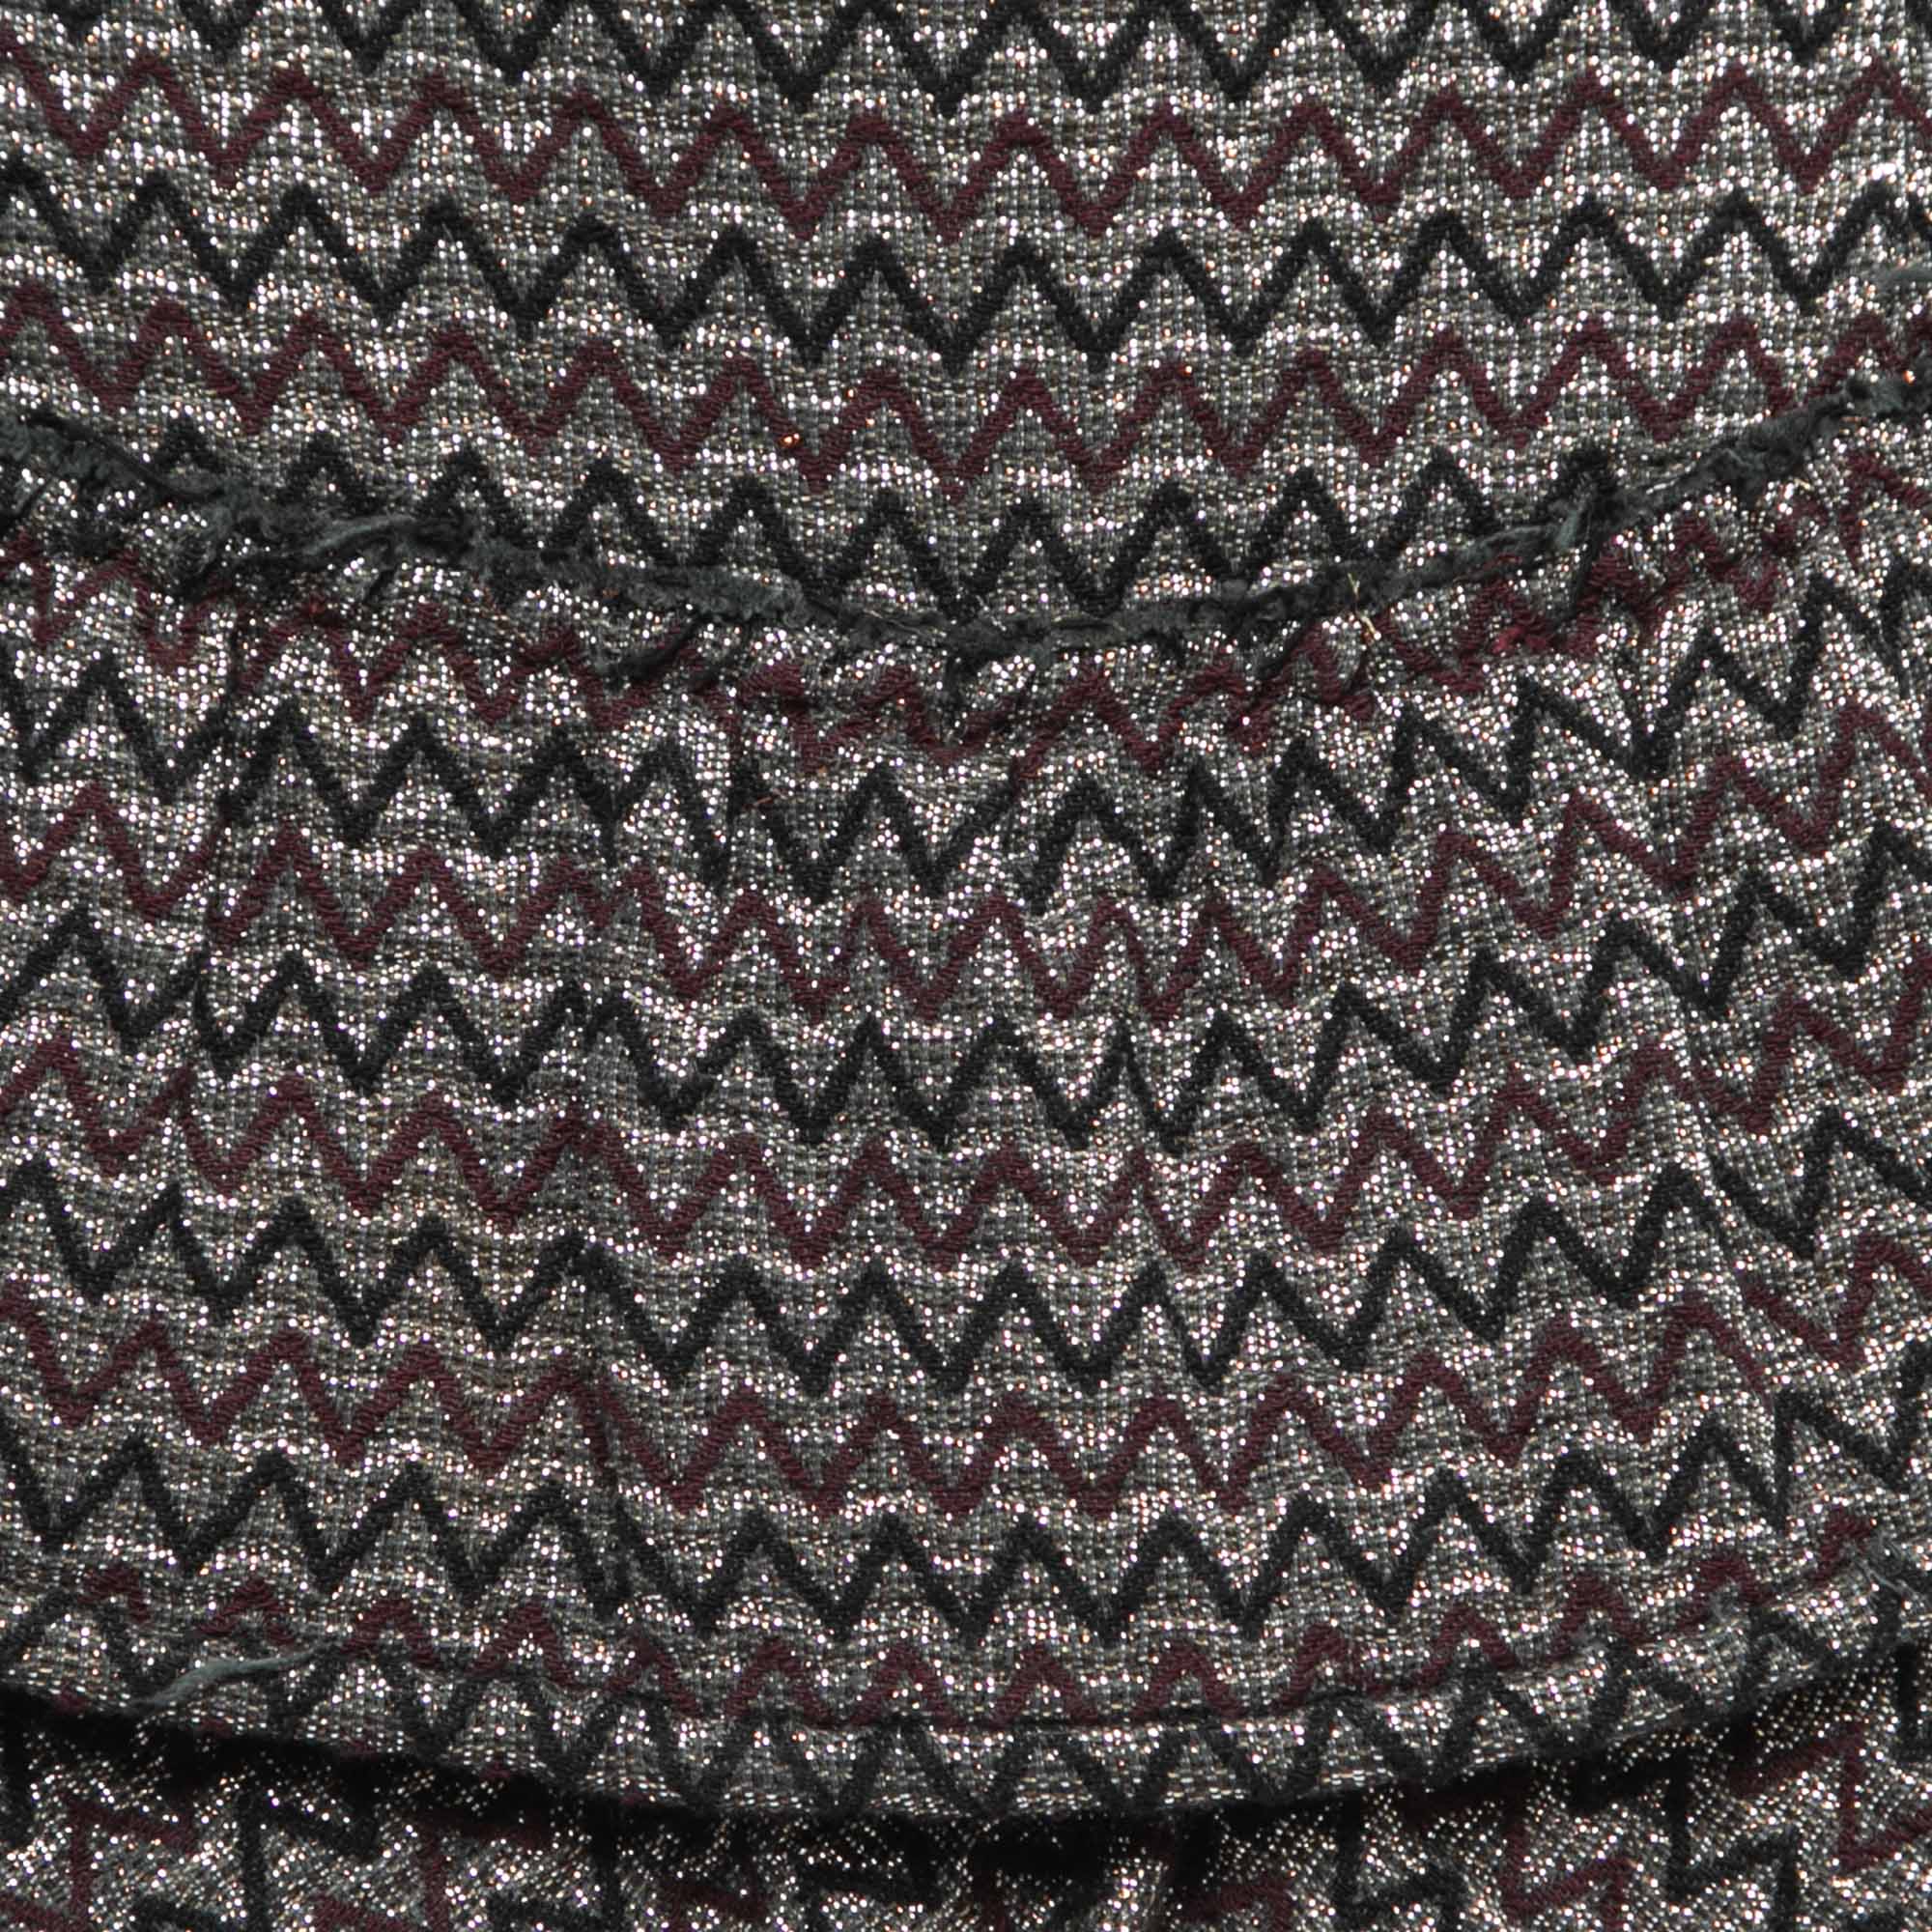 Isabel Marant Silver Zig-Zag Patterned Lurex Knit Mini Skirt M